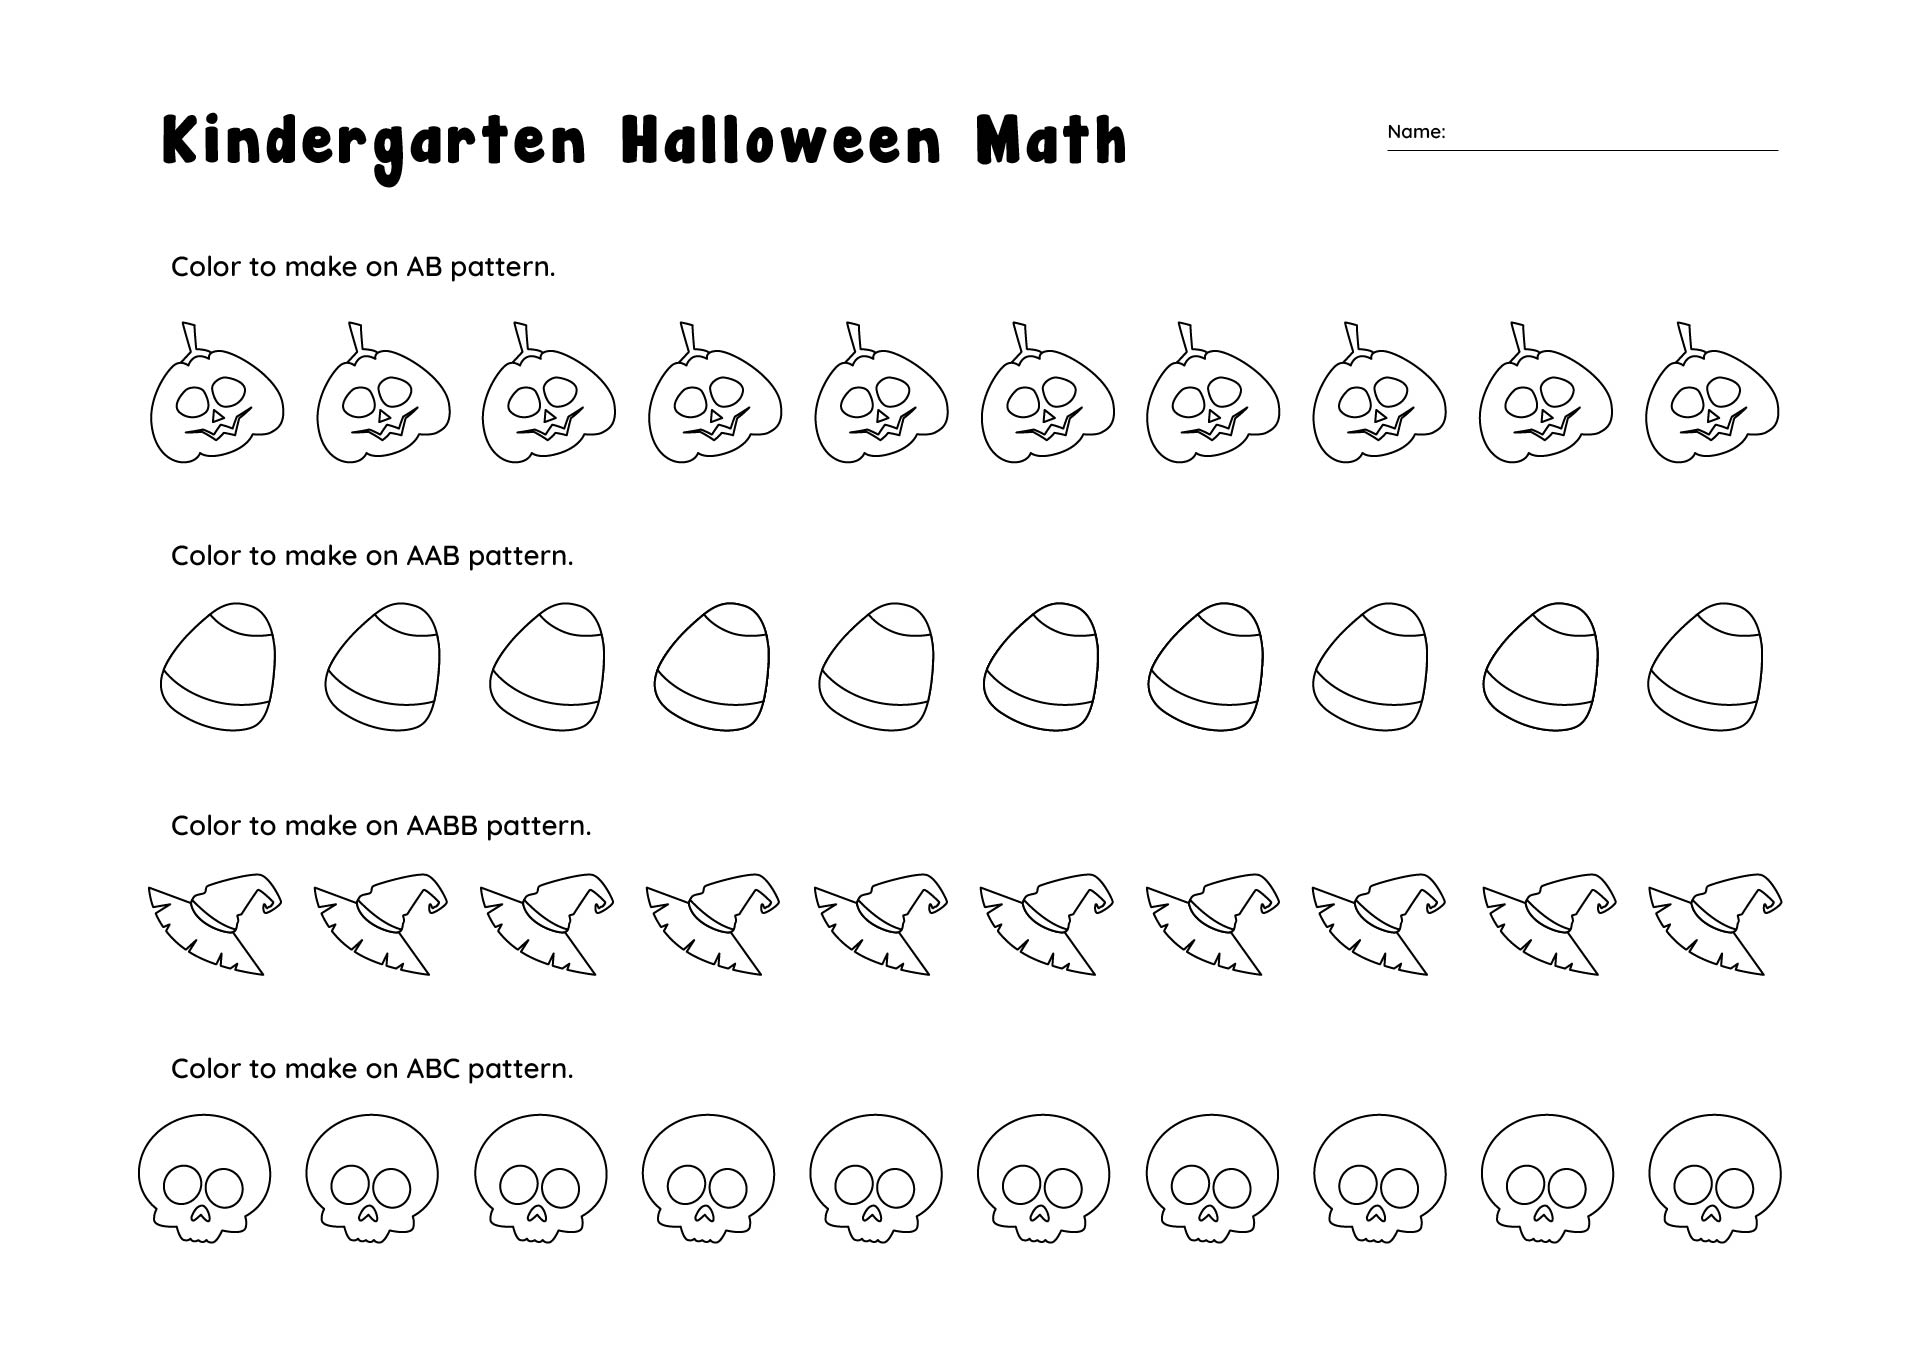 Printable Kindergarten Halloween Math Patterns Worksheet